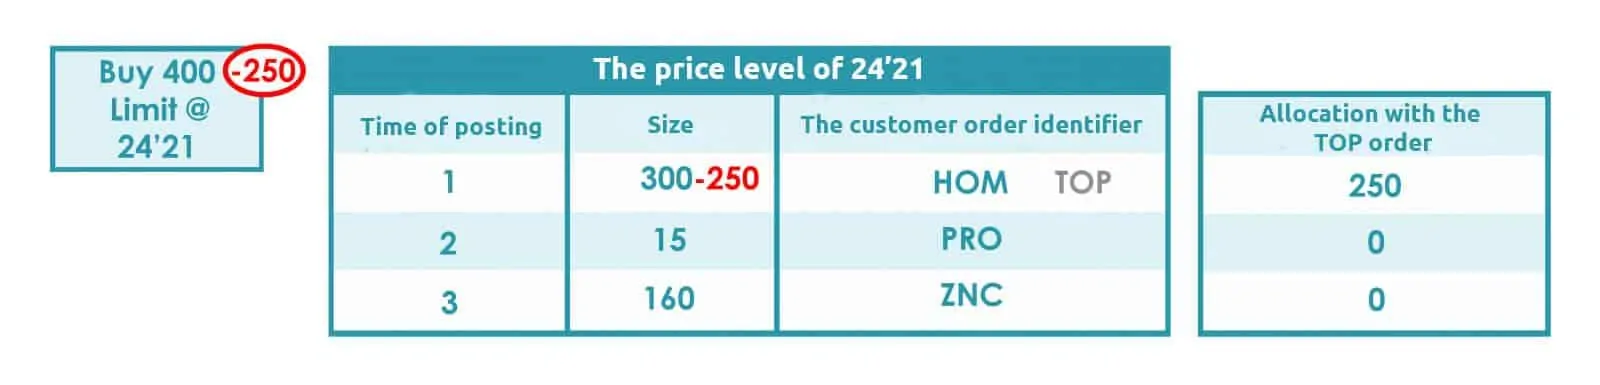 The price level of 24’21